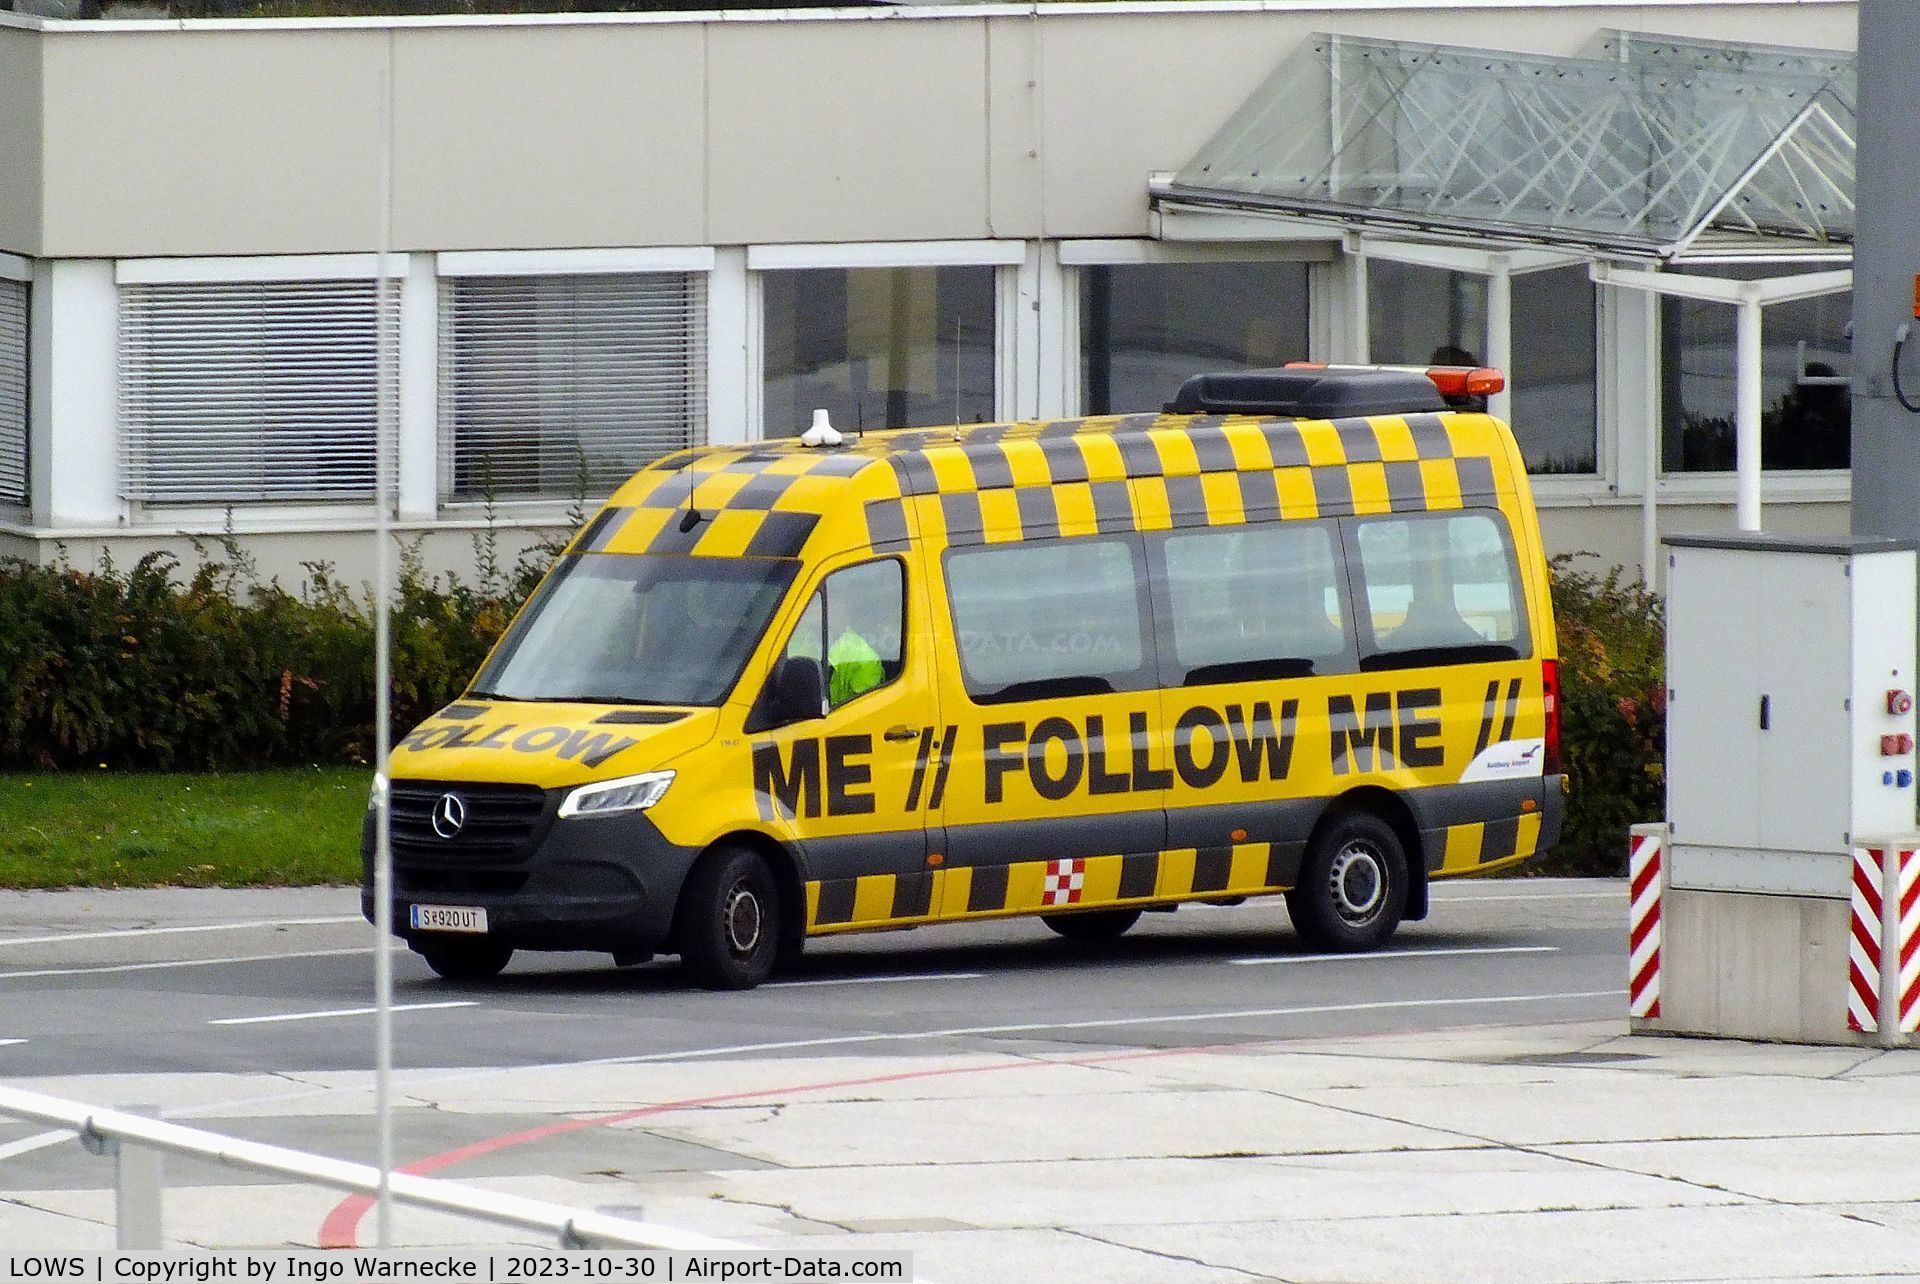 Salzburg Airport, Salzburg Austria (LOWS) - Follow-Me vehicle at Salzburg airport